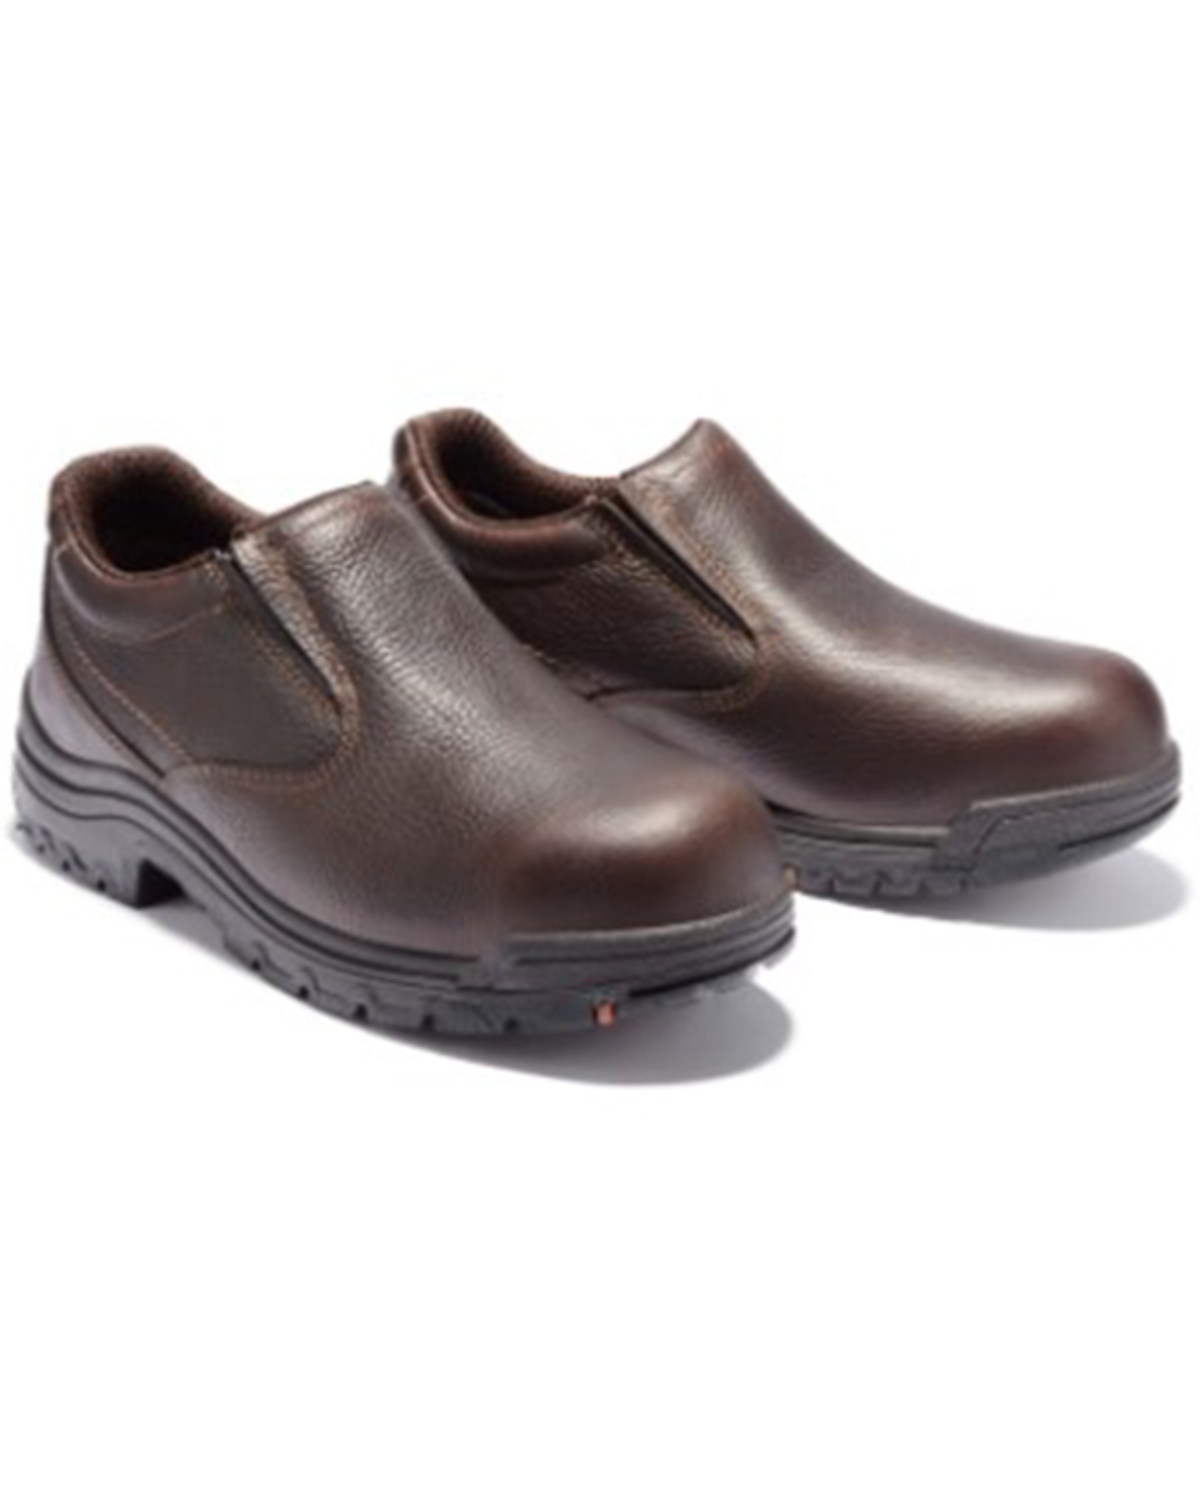 Timberland Pro Men's Slip-On Work Shoes - Steel Toe